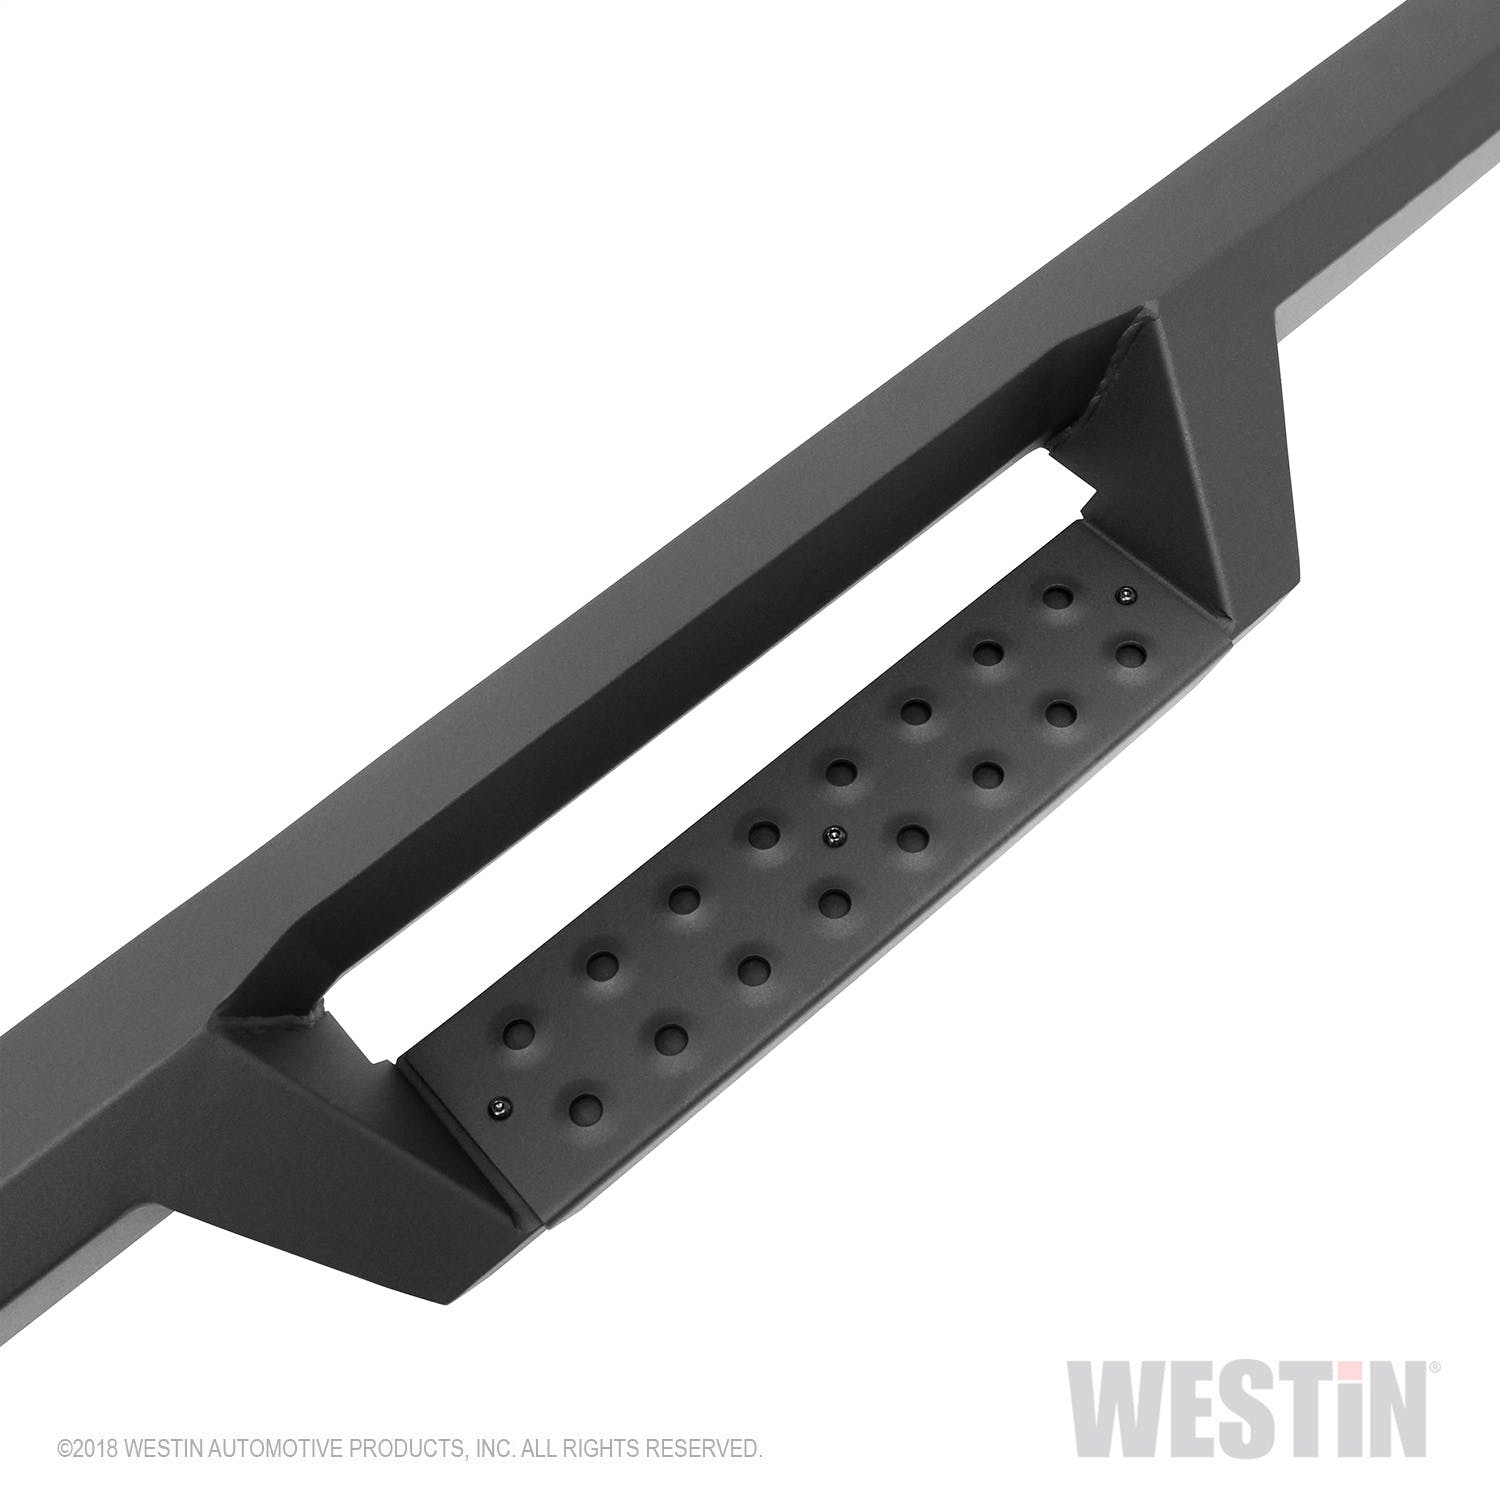 Westin Automotive 56-534705 HDX Drop Wheel-to-Wheel Nerf Step Bars Textured Black